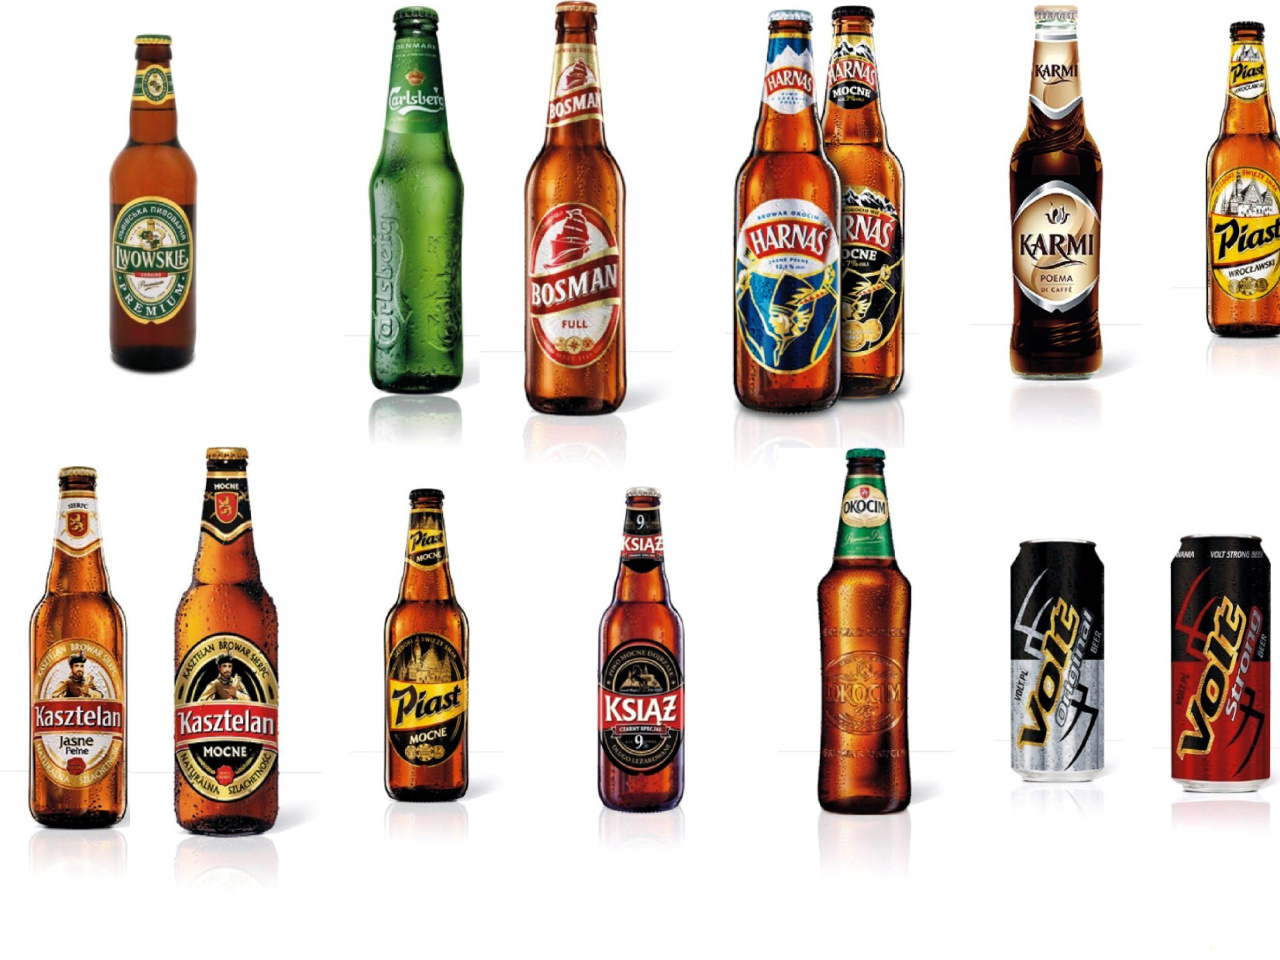 Das Beer Brands, Bosman, Ksiaz, Harnas, Kasztelan Wallpaper 1280x960